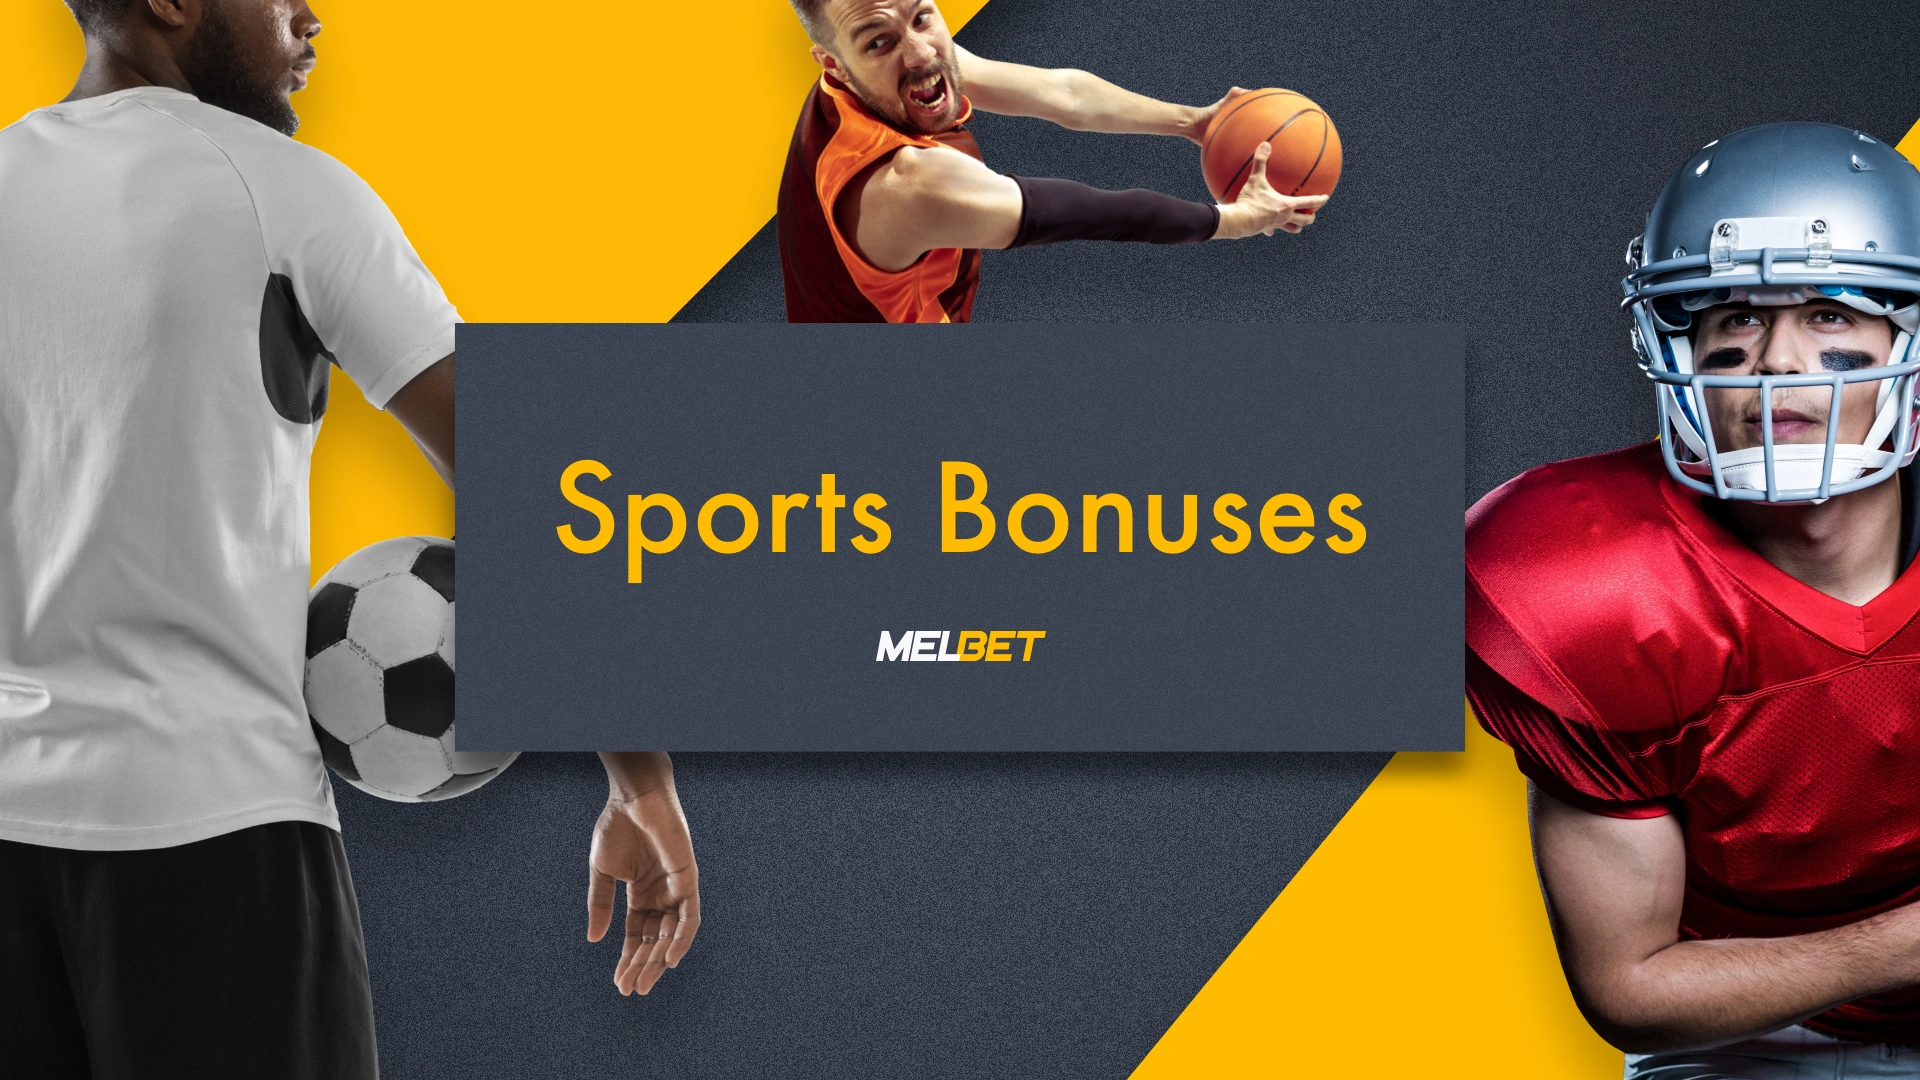 Sports bonuses at Melbet for players from Bangladesh